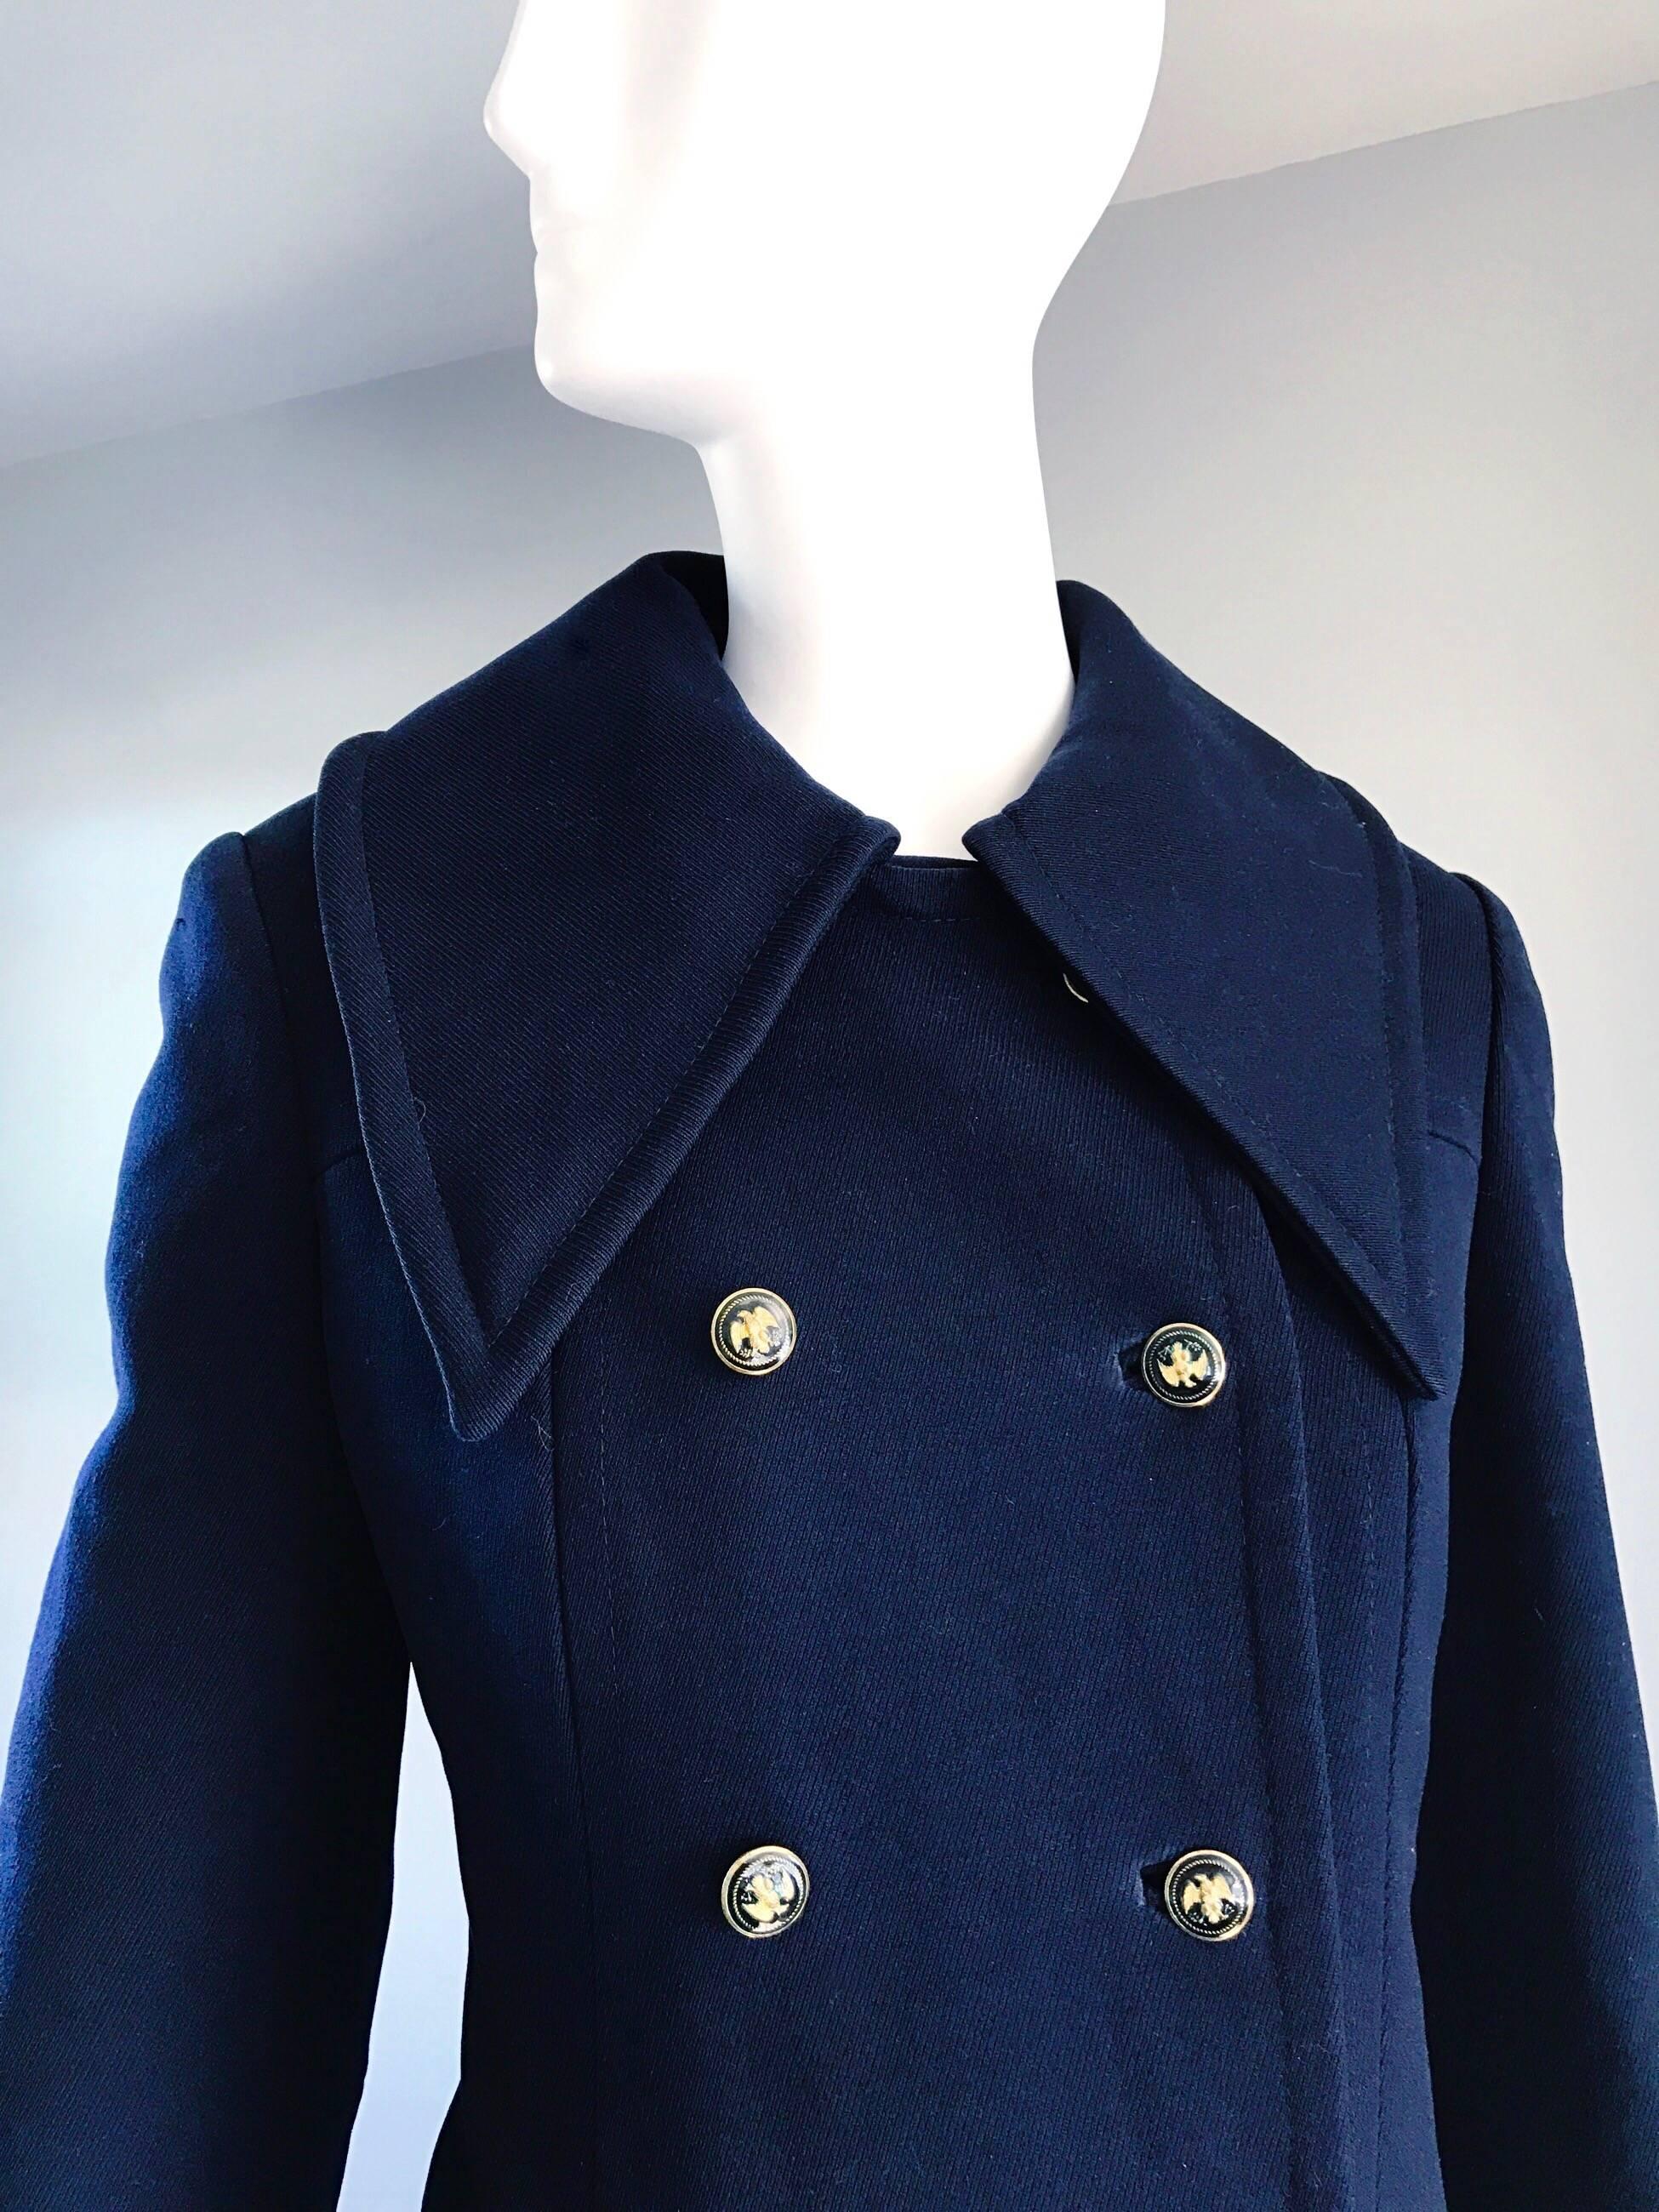 Black 1970s SAKS 5th AVENUE Navy Blue Double Breasted Long Wool Peacoat Jacket Coat